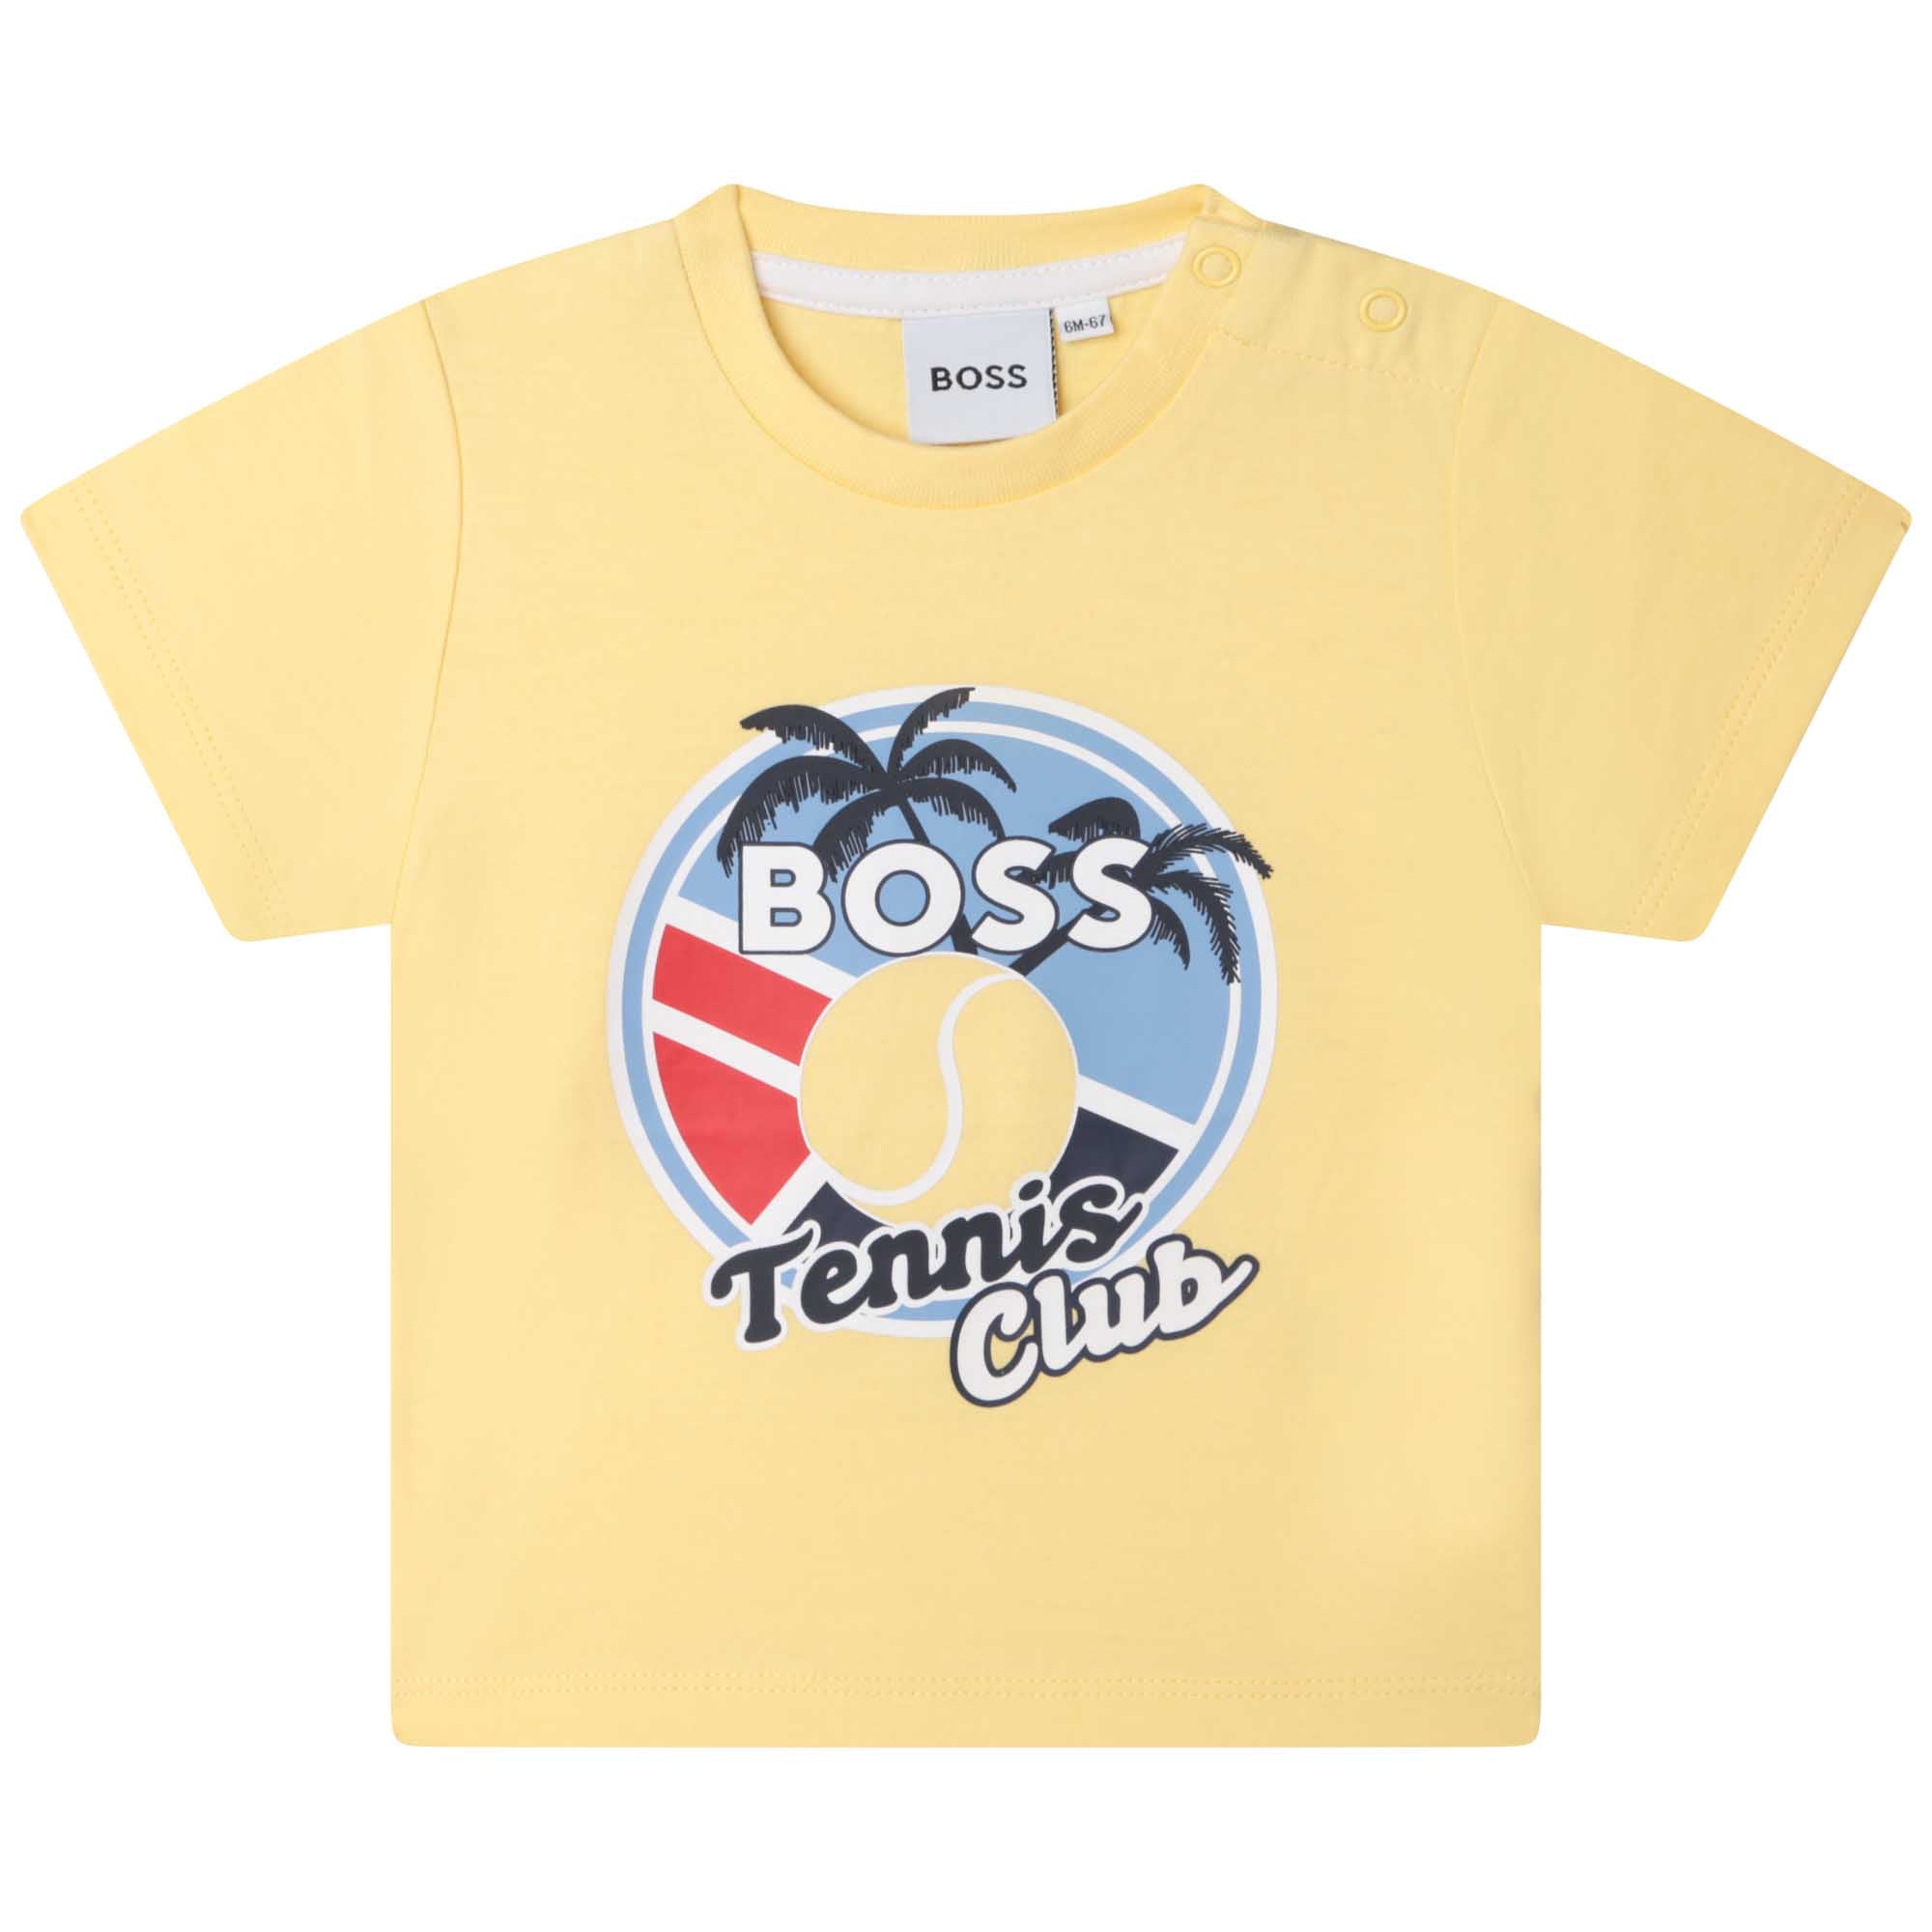 Baby Boys Yellow Printed Cotton T-Shirt